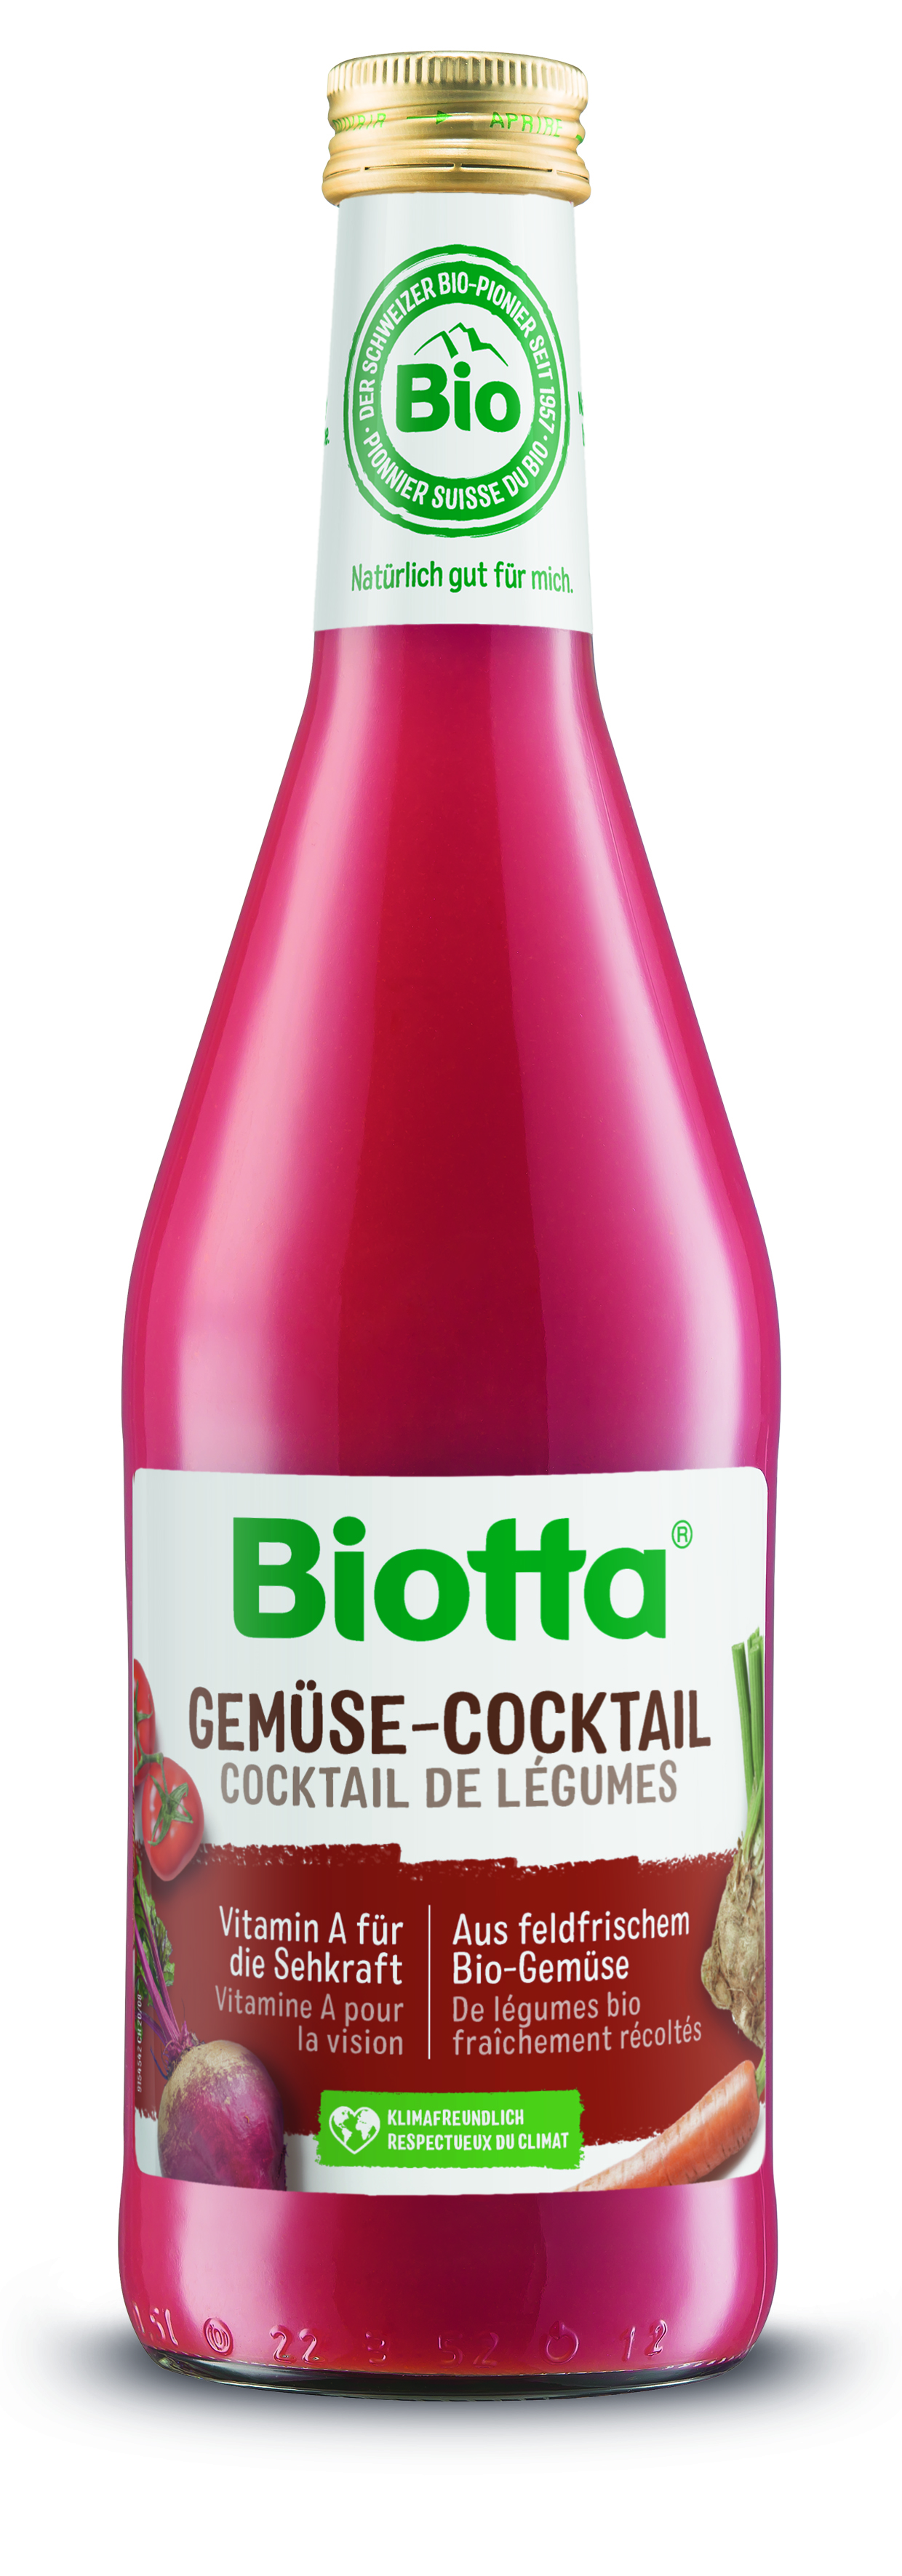 Biotta zeleninový kokteil 1 kartón - cena za 1 ks 3,68€ s DPH